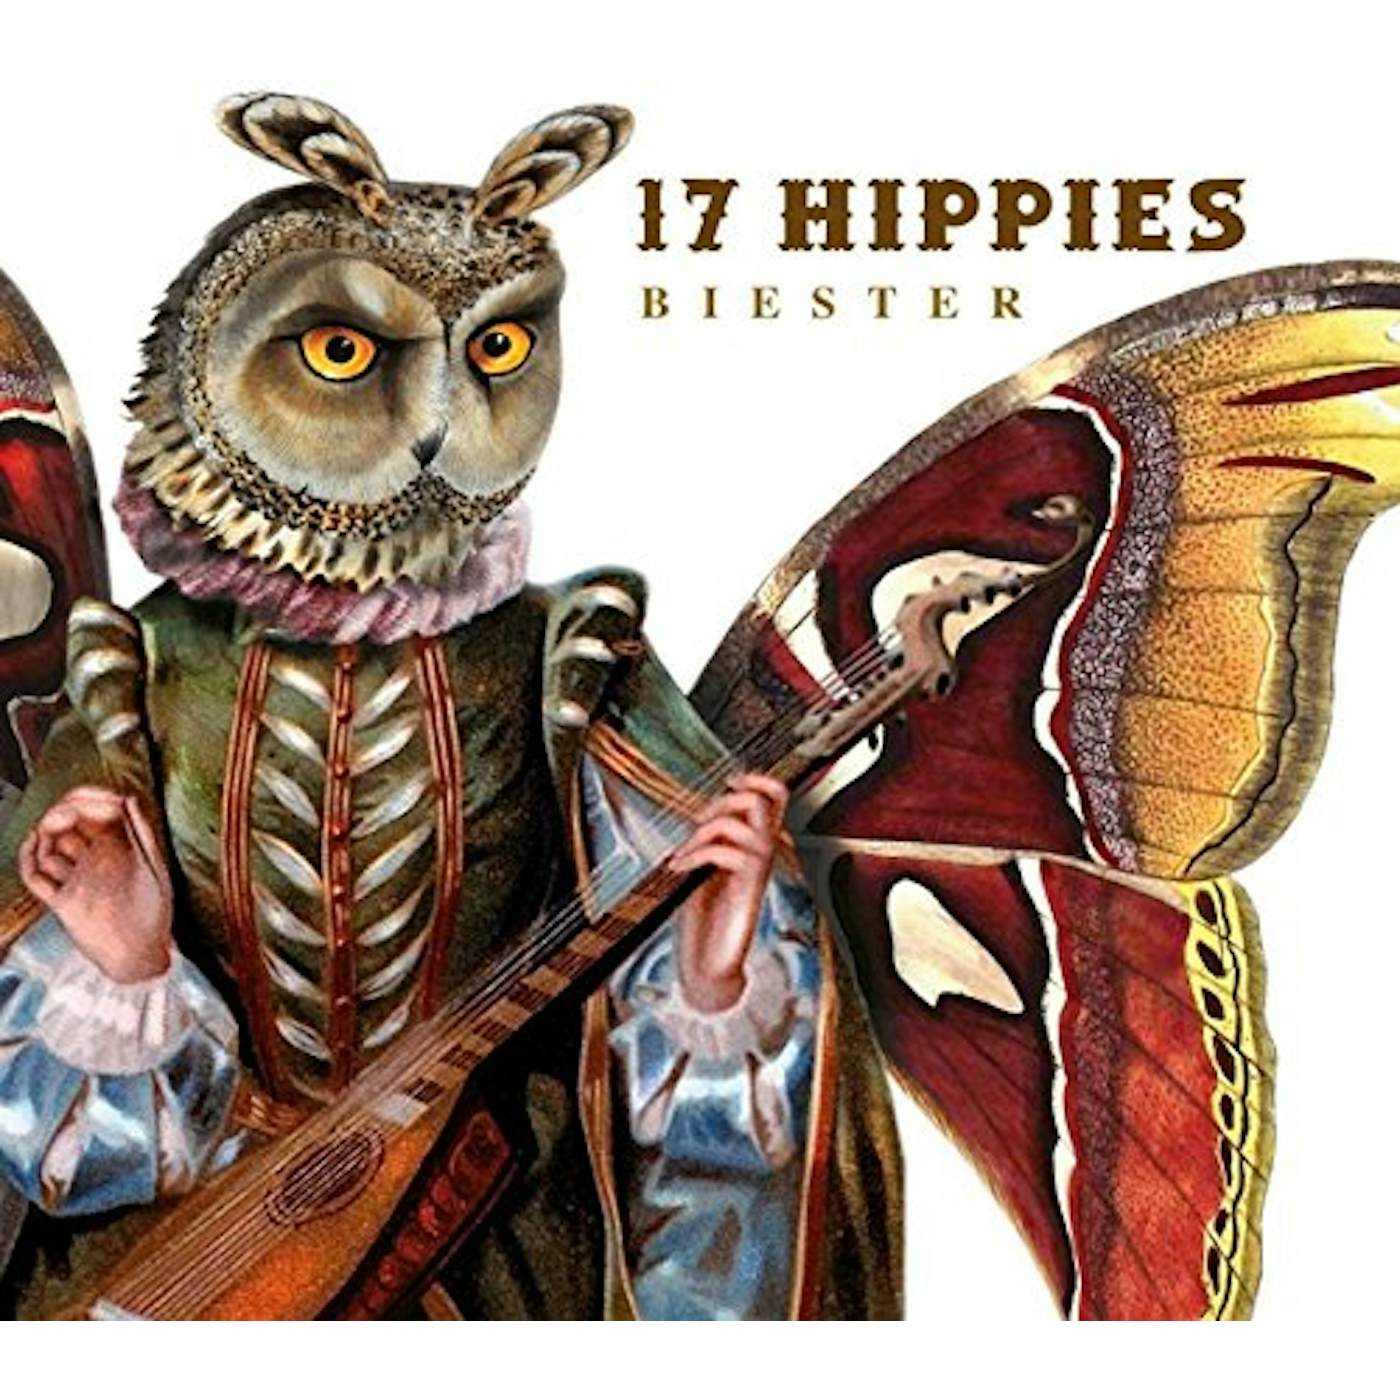 17 Hippies Biester Vinyl Record